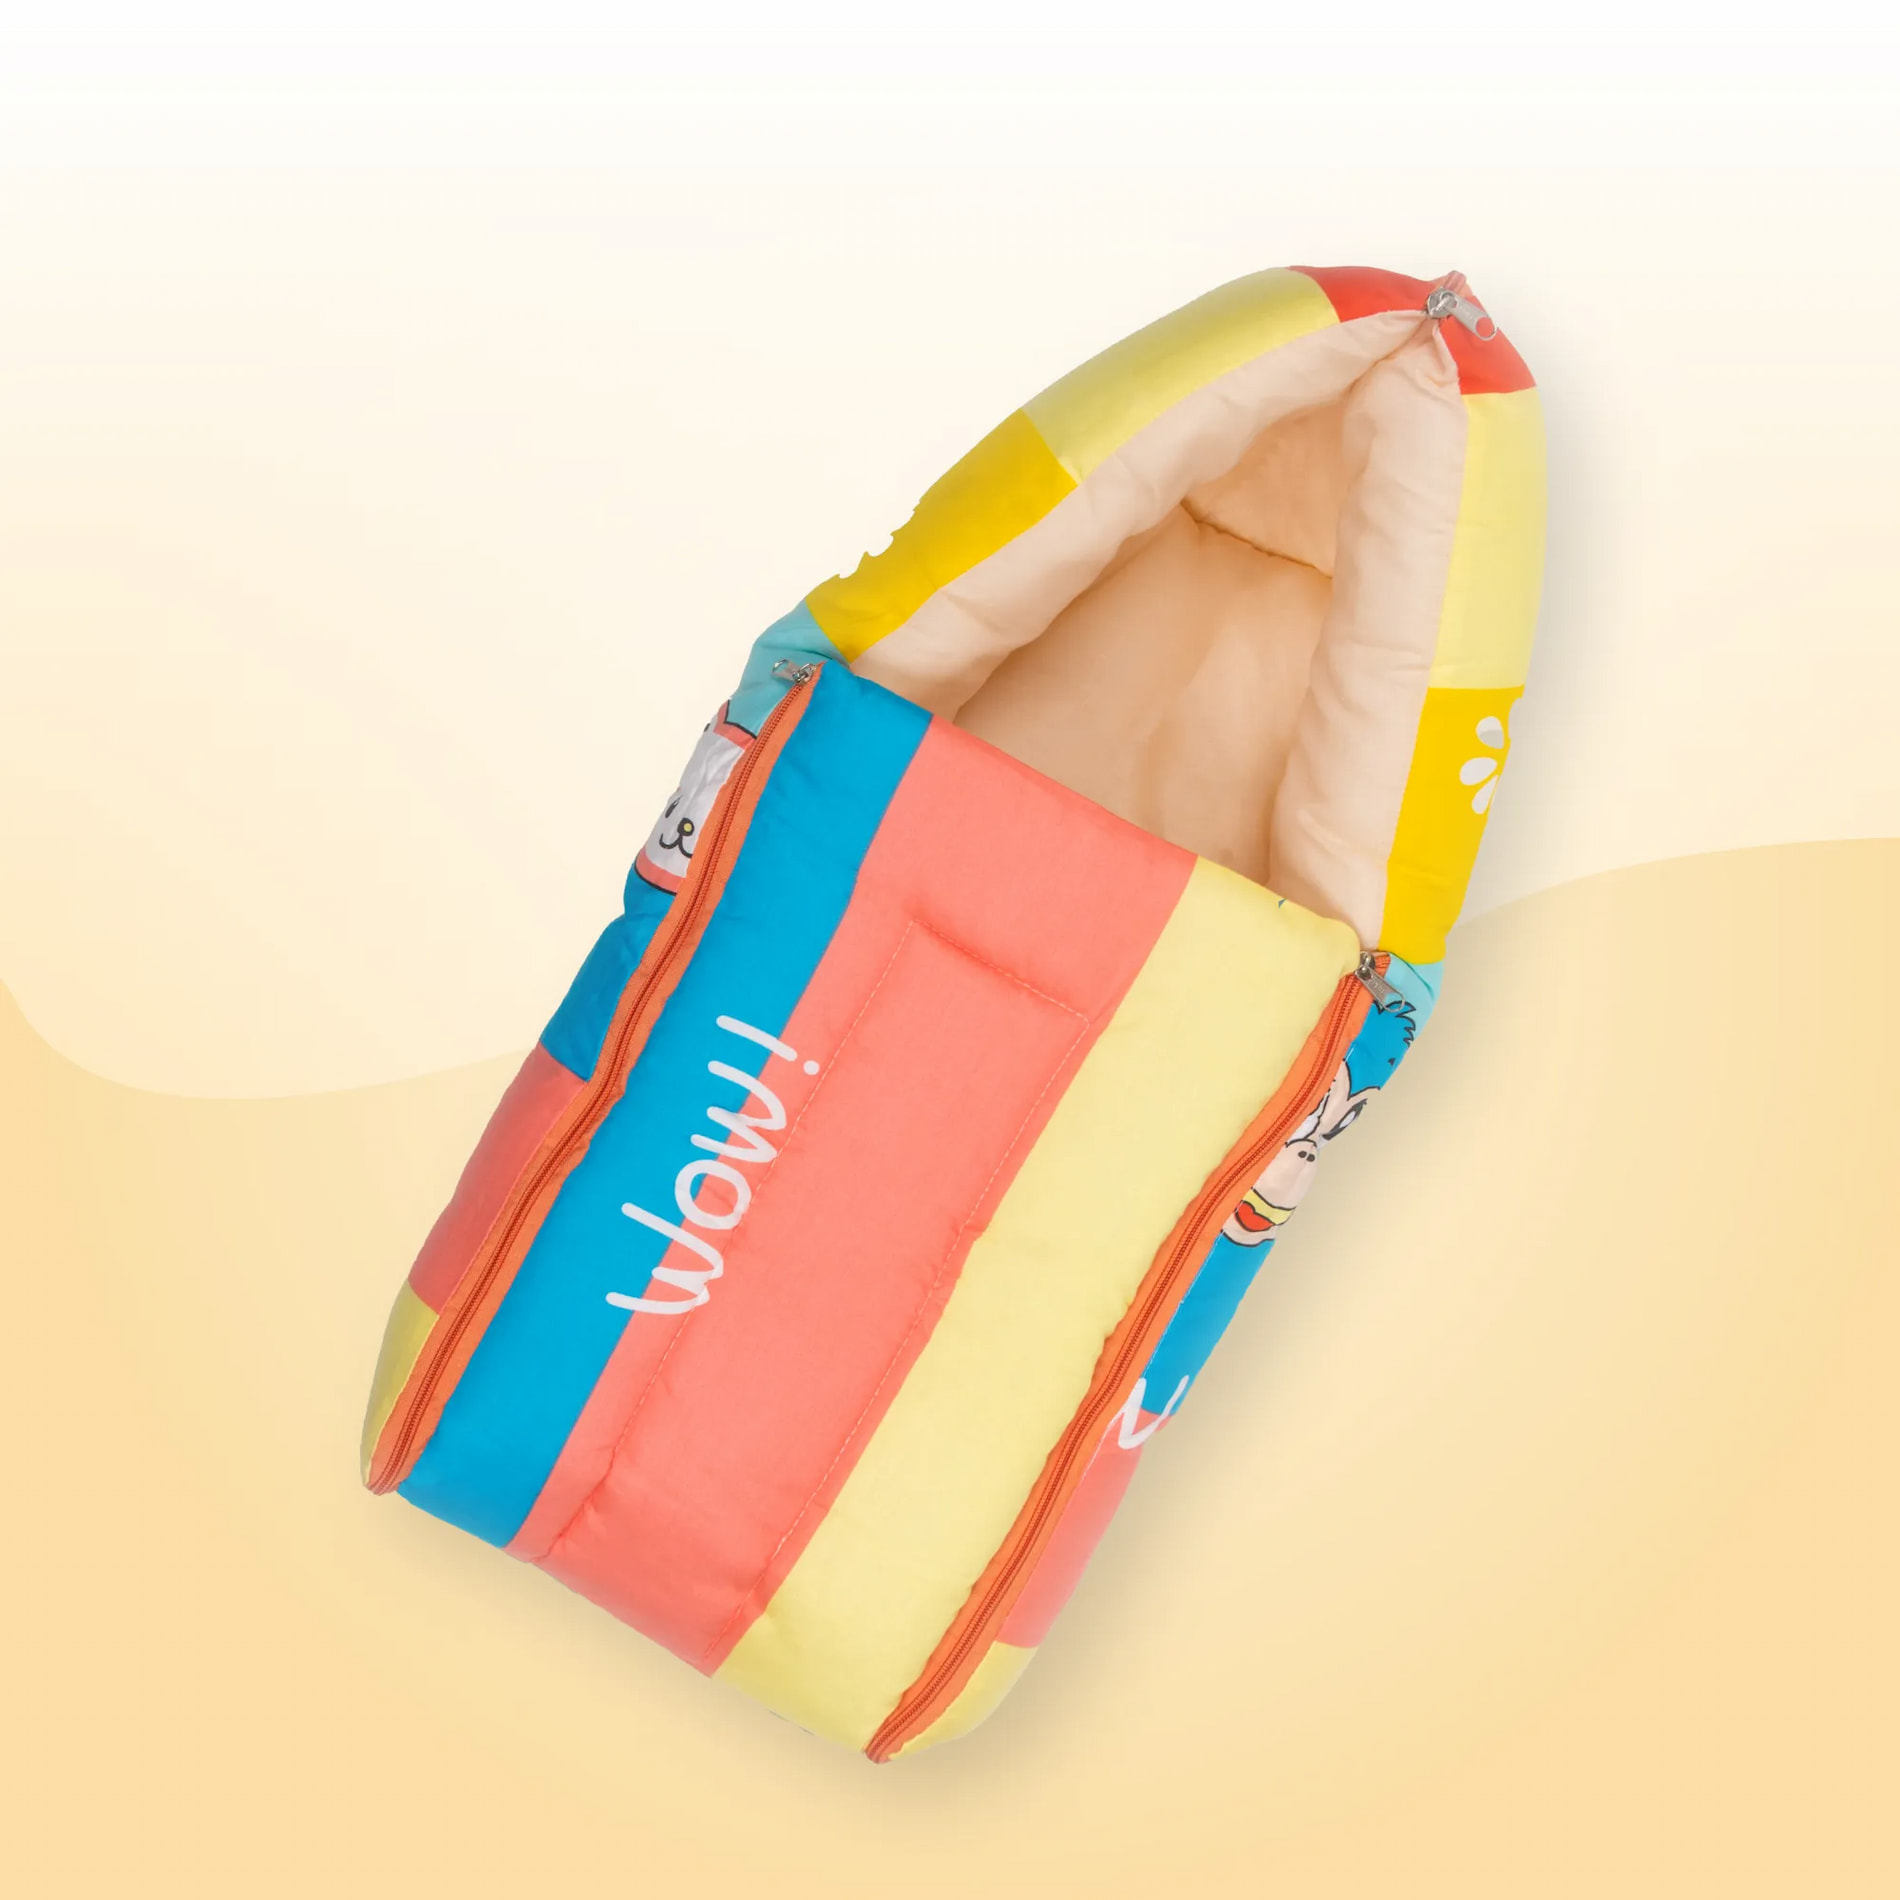 4-in-1 Soft & Snuggly Baby Sleeping Bag - Magical Rainbow